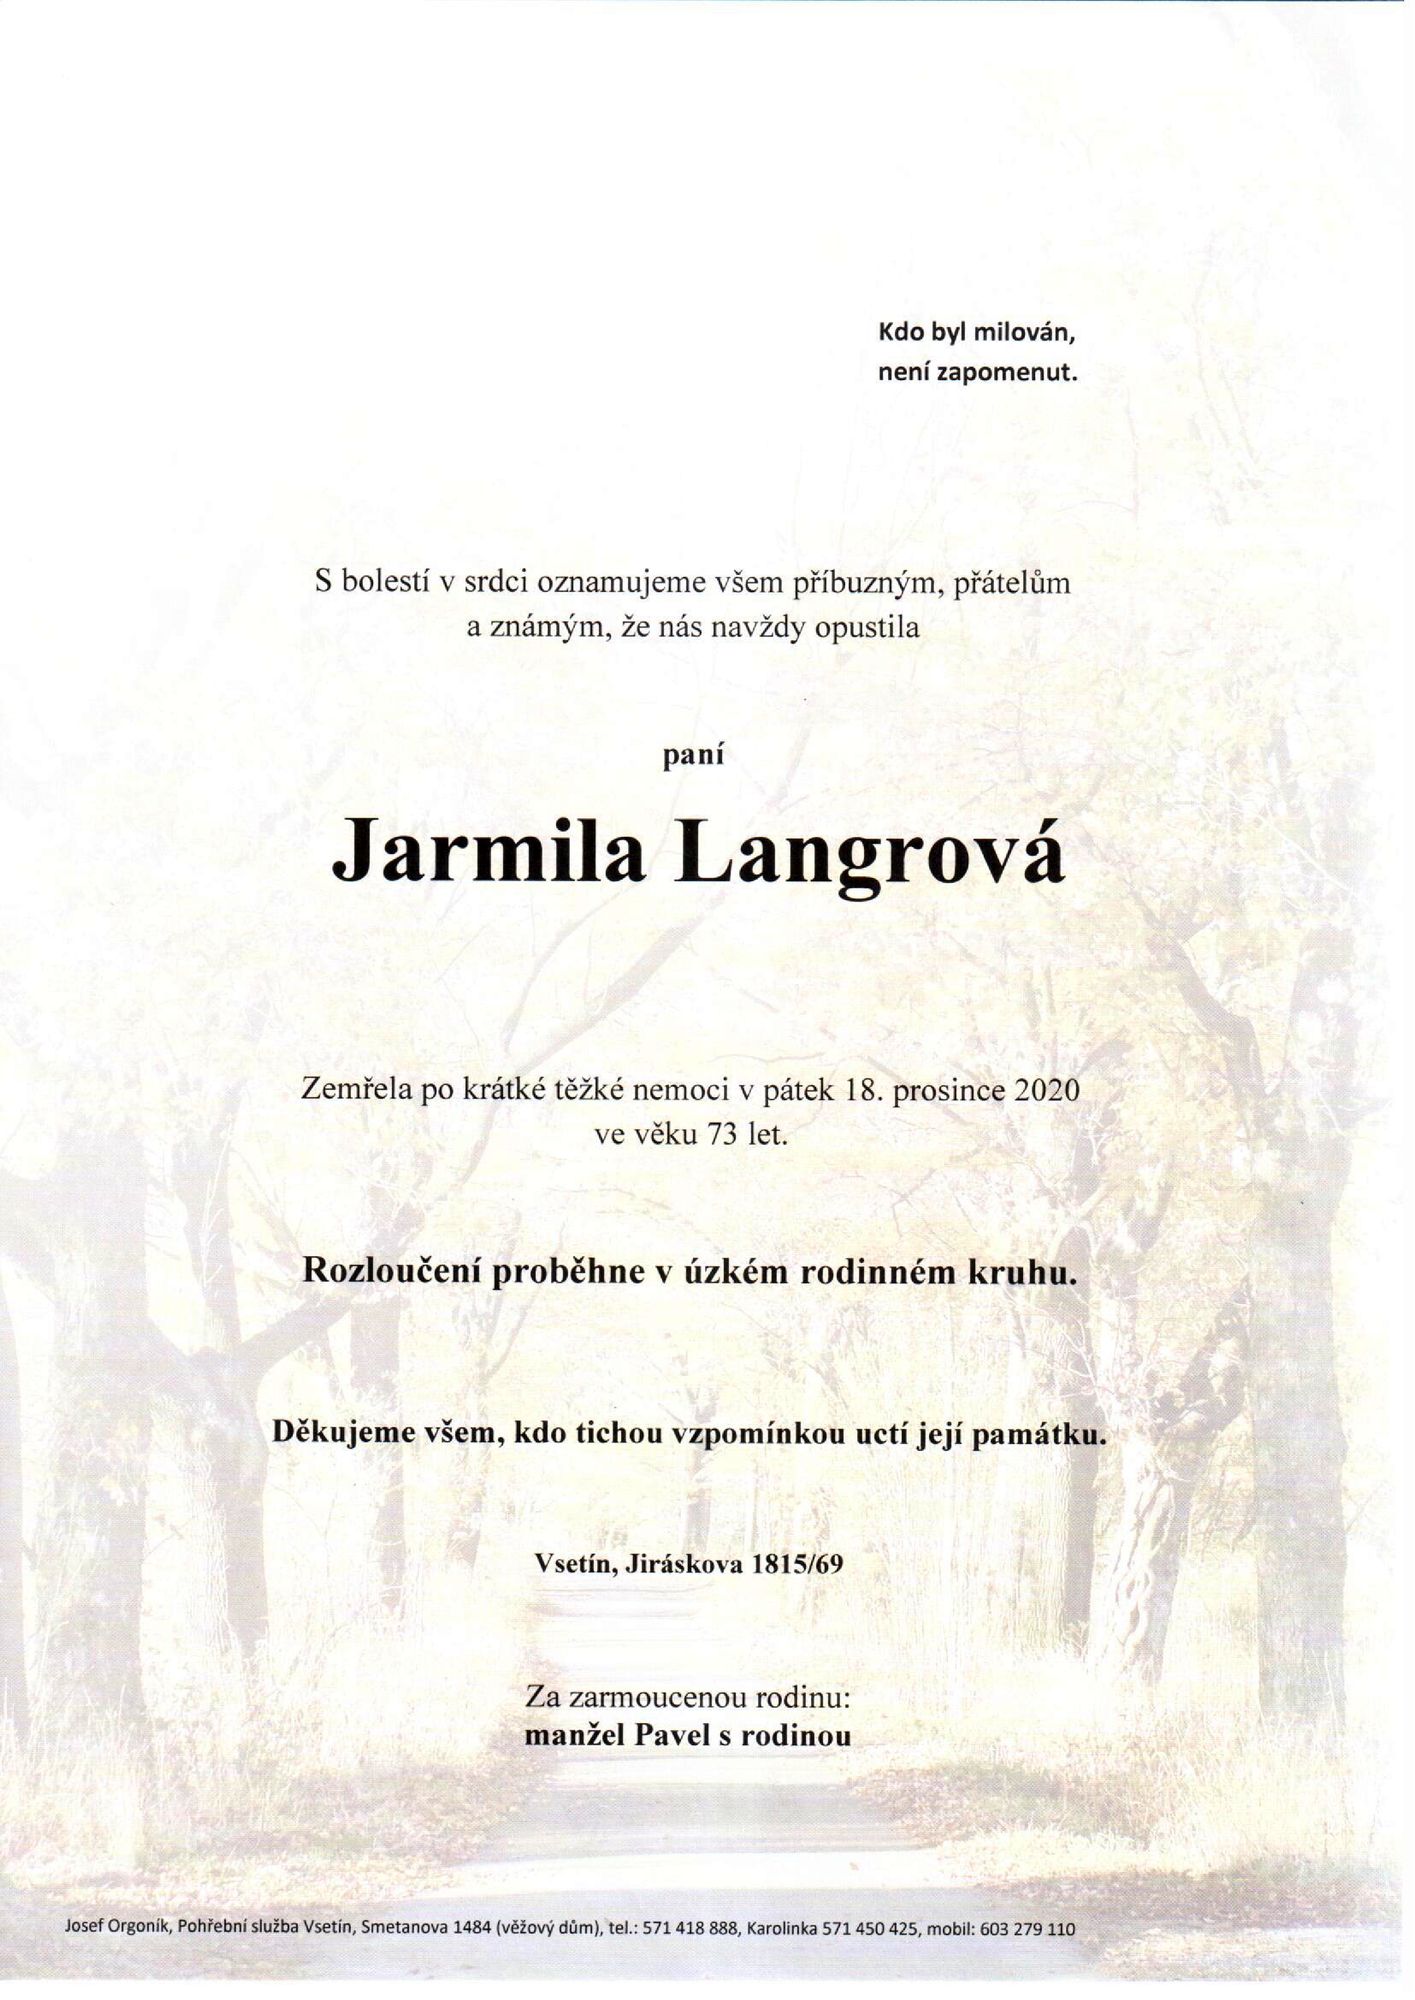 Jarmila Langrová